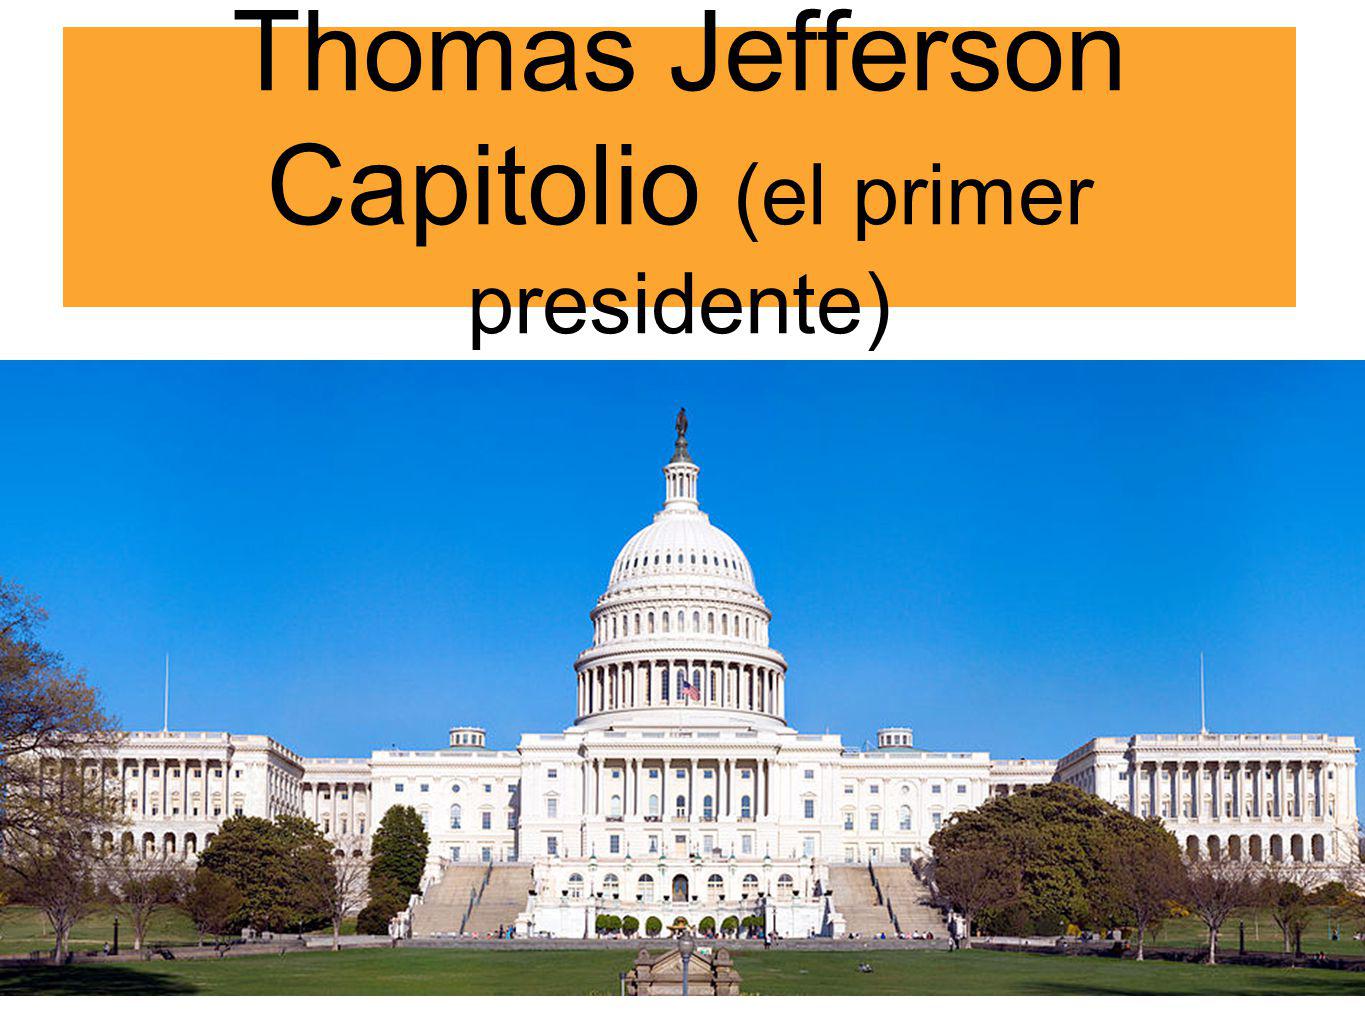 Thomas Jefferson Capitolio (el primer presidente)